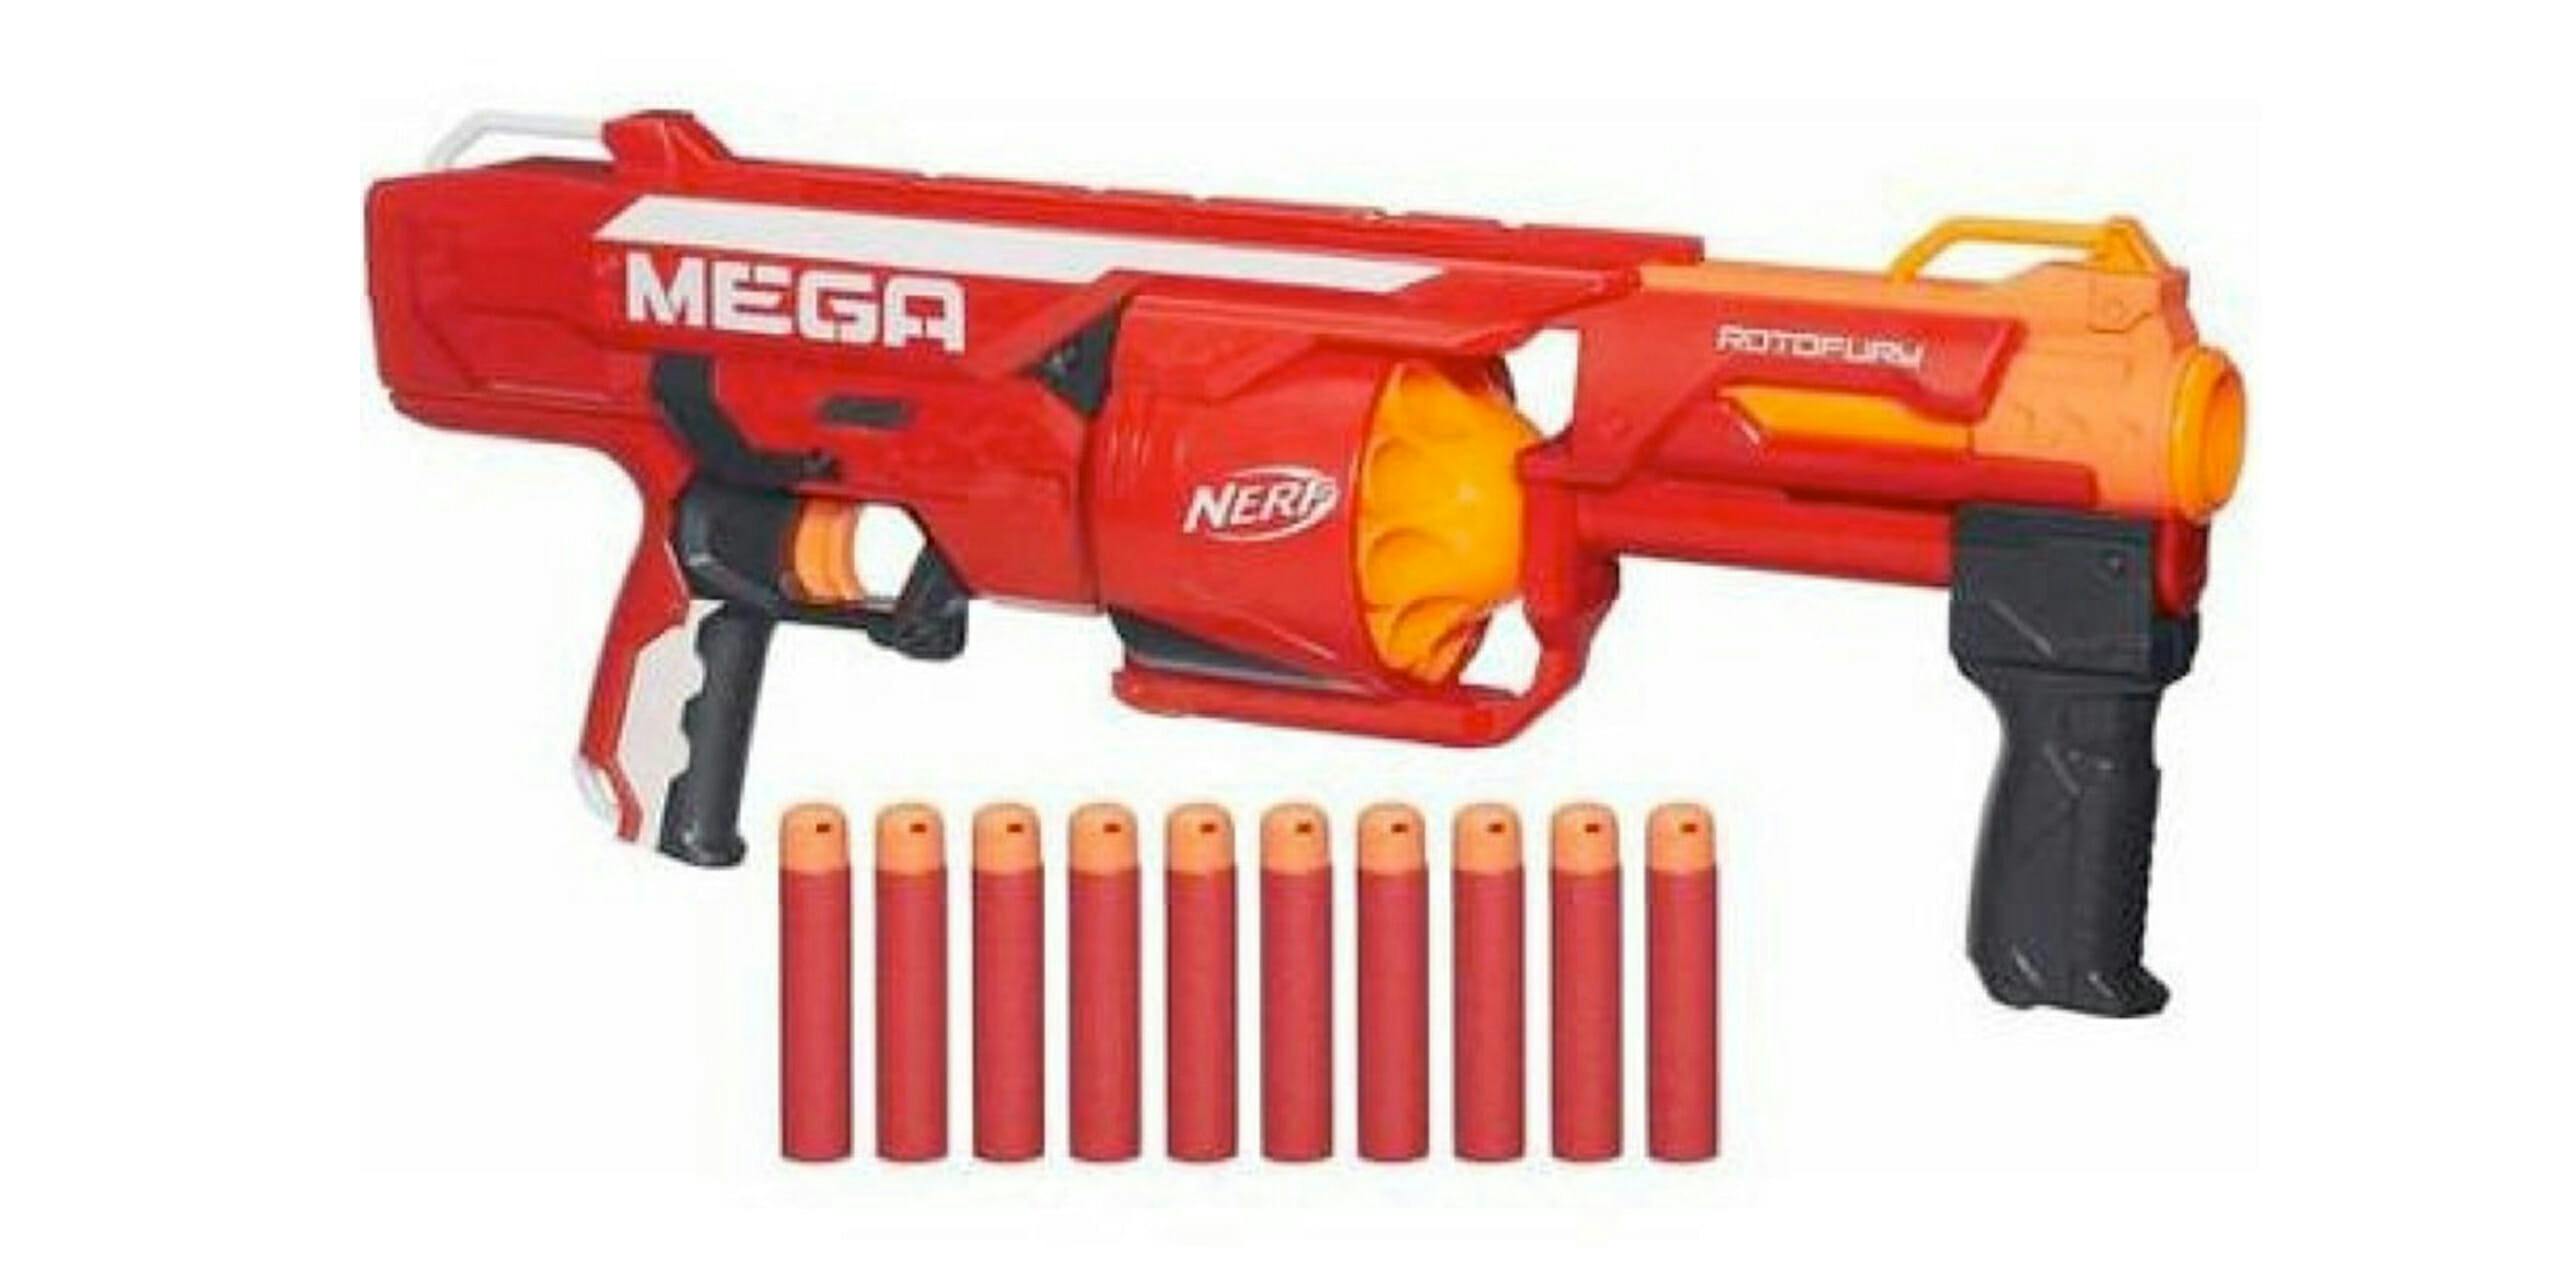 mega nerf gun